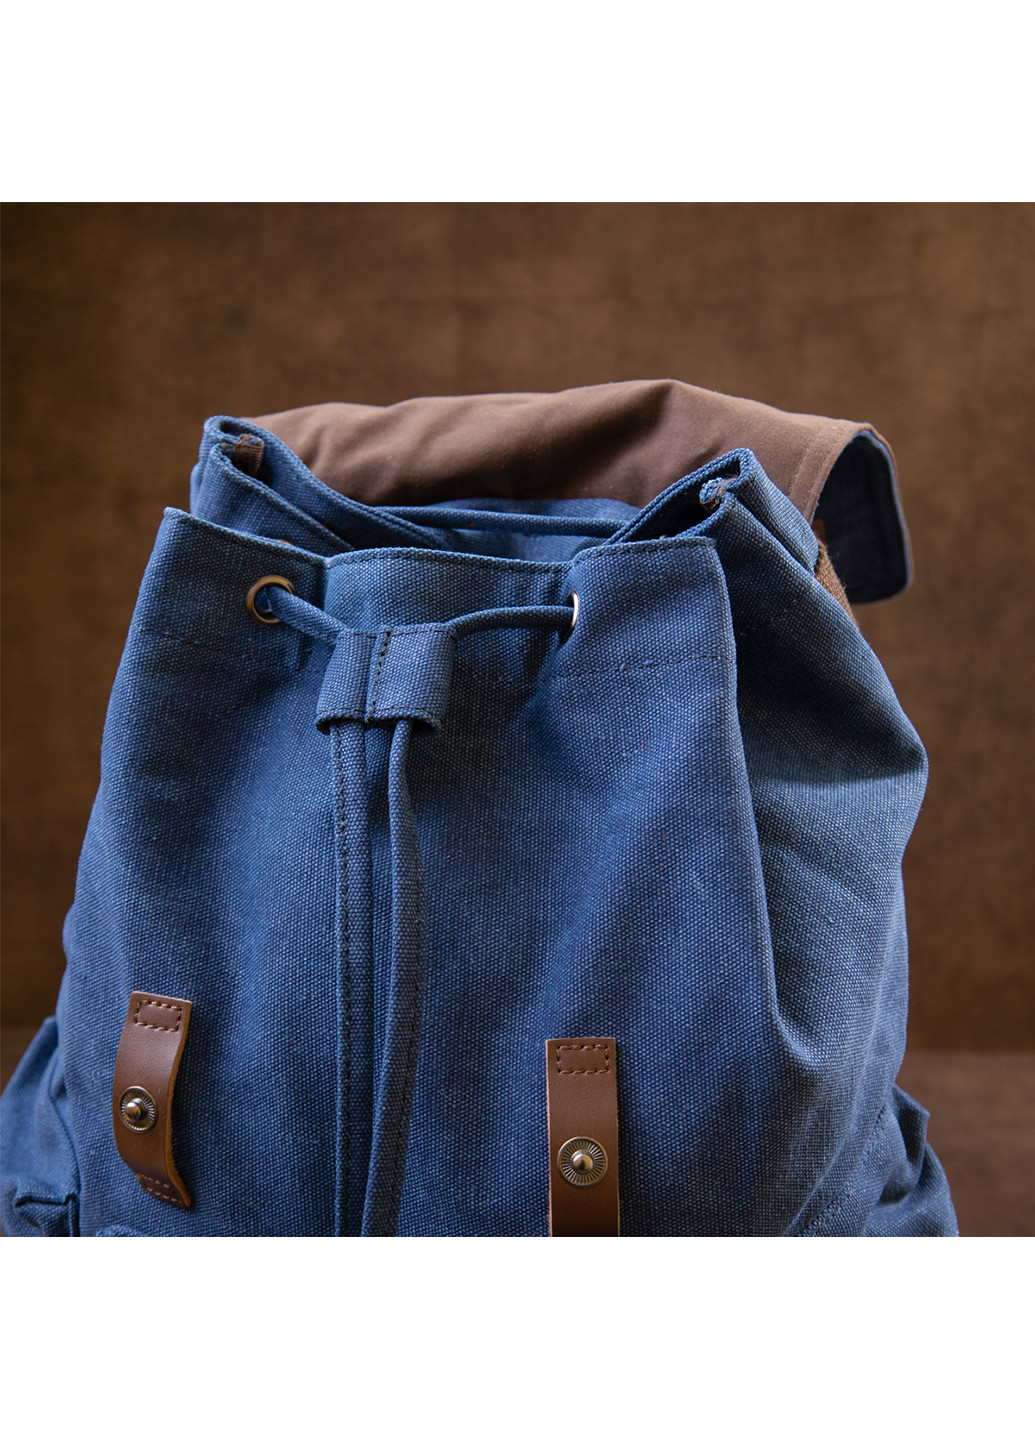 Текстильный рюкзак 35х47,5х16 см Vintage (242188843)